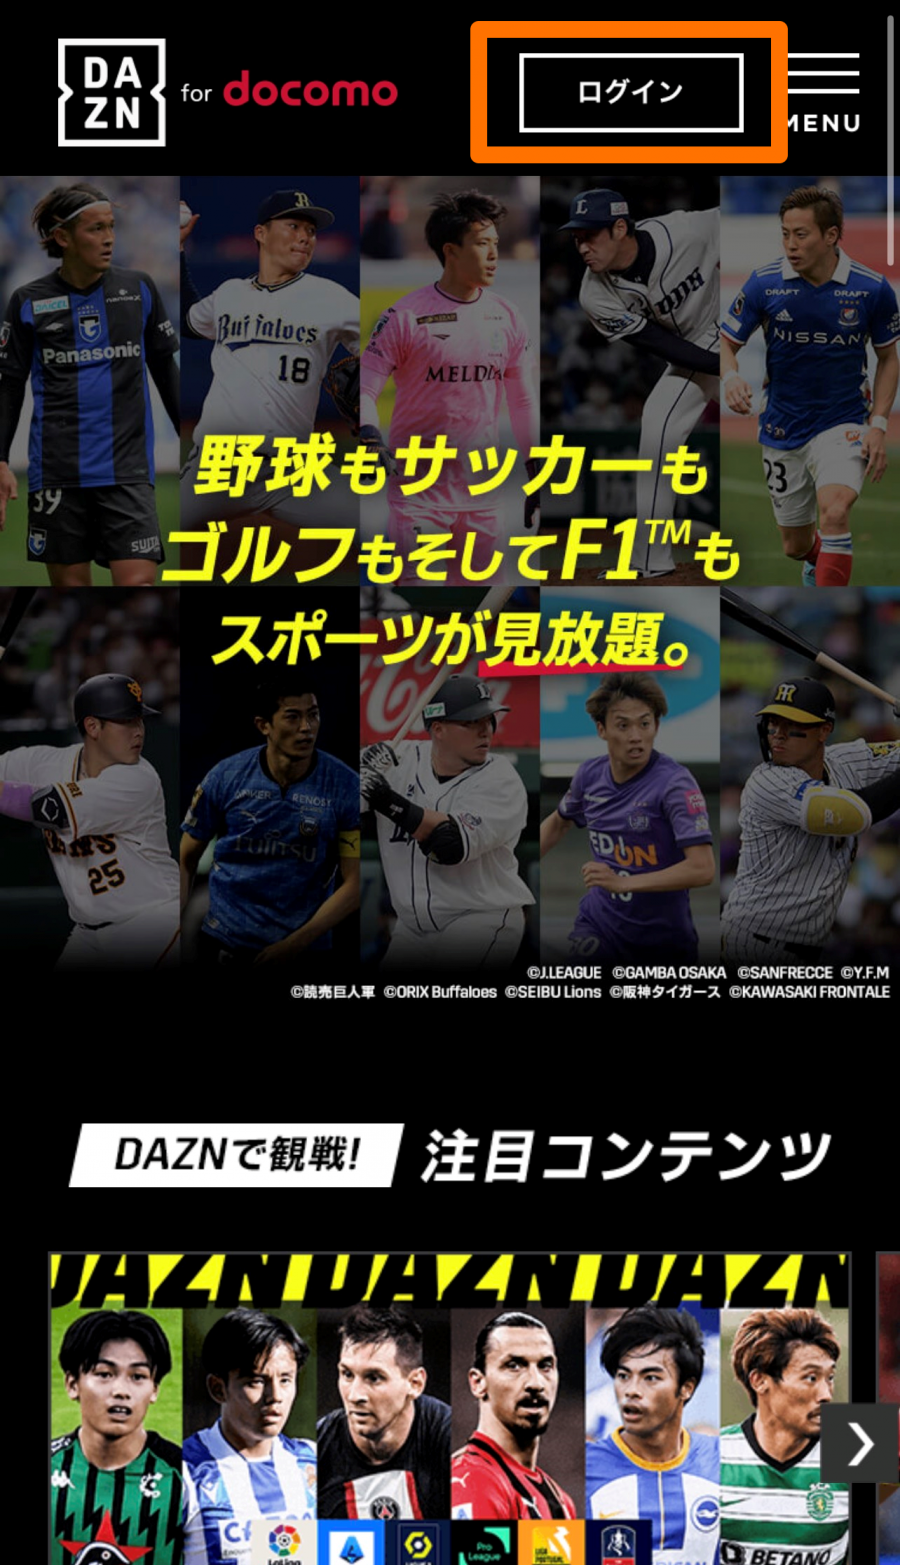 DAZN for docomo公式サイト